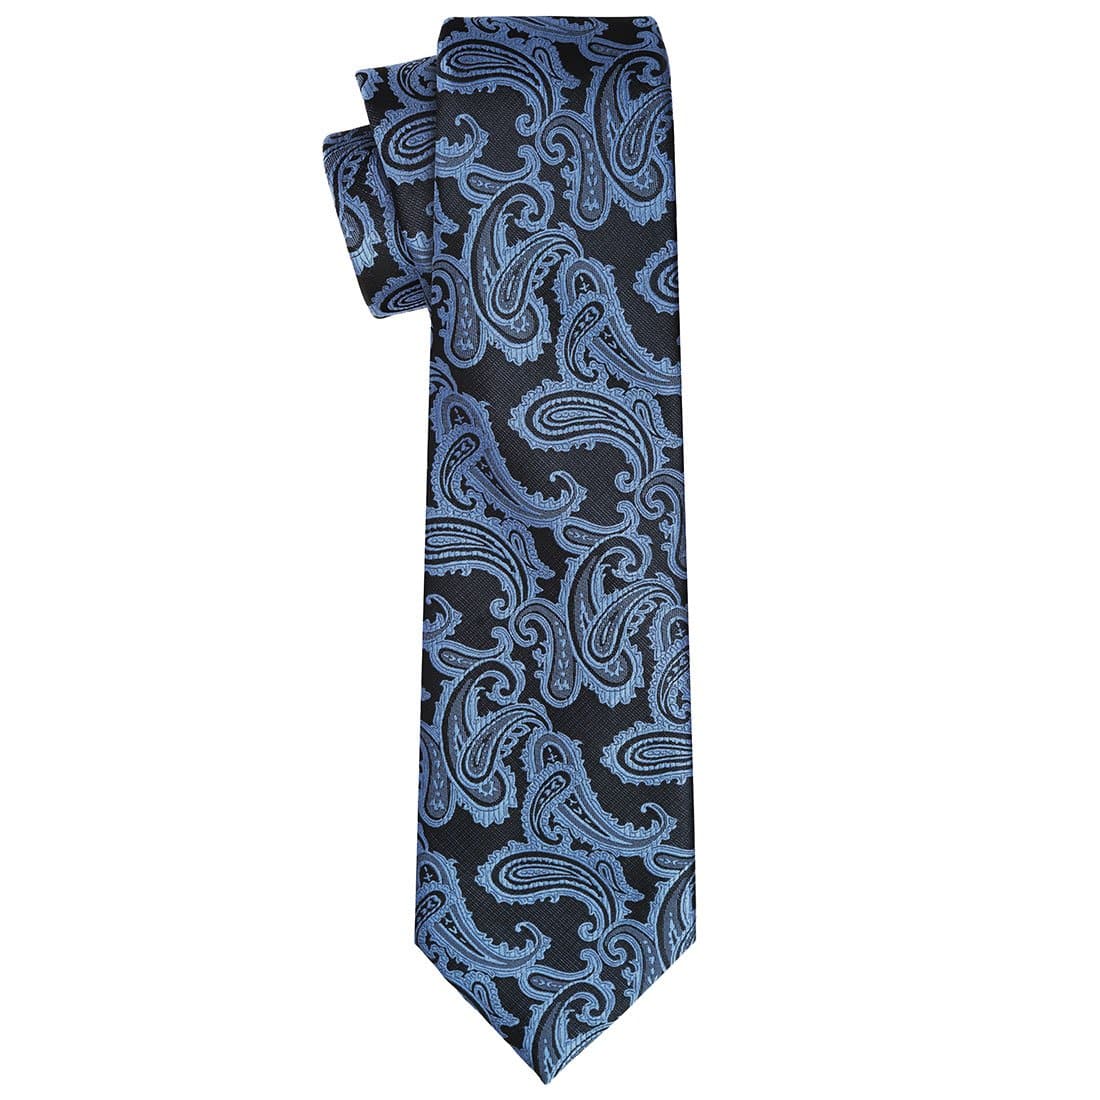 Steel Blue  on Black Paisley Tie - Tie, bowtie, pocket square  | Kissties